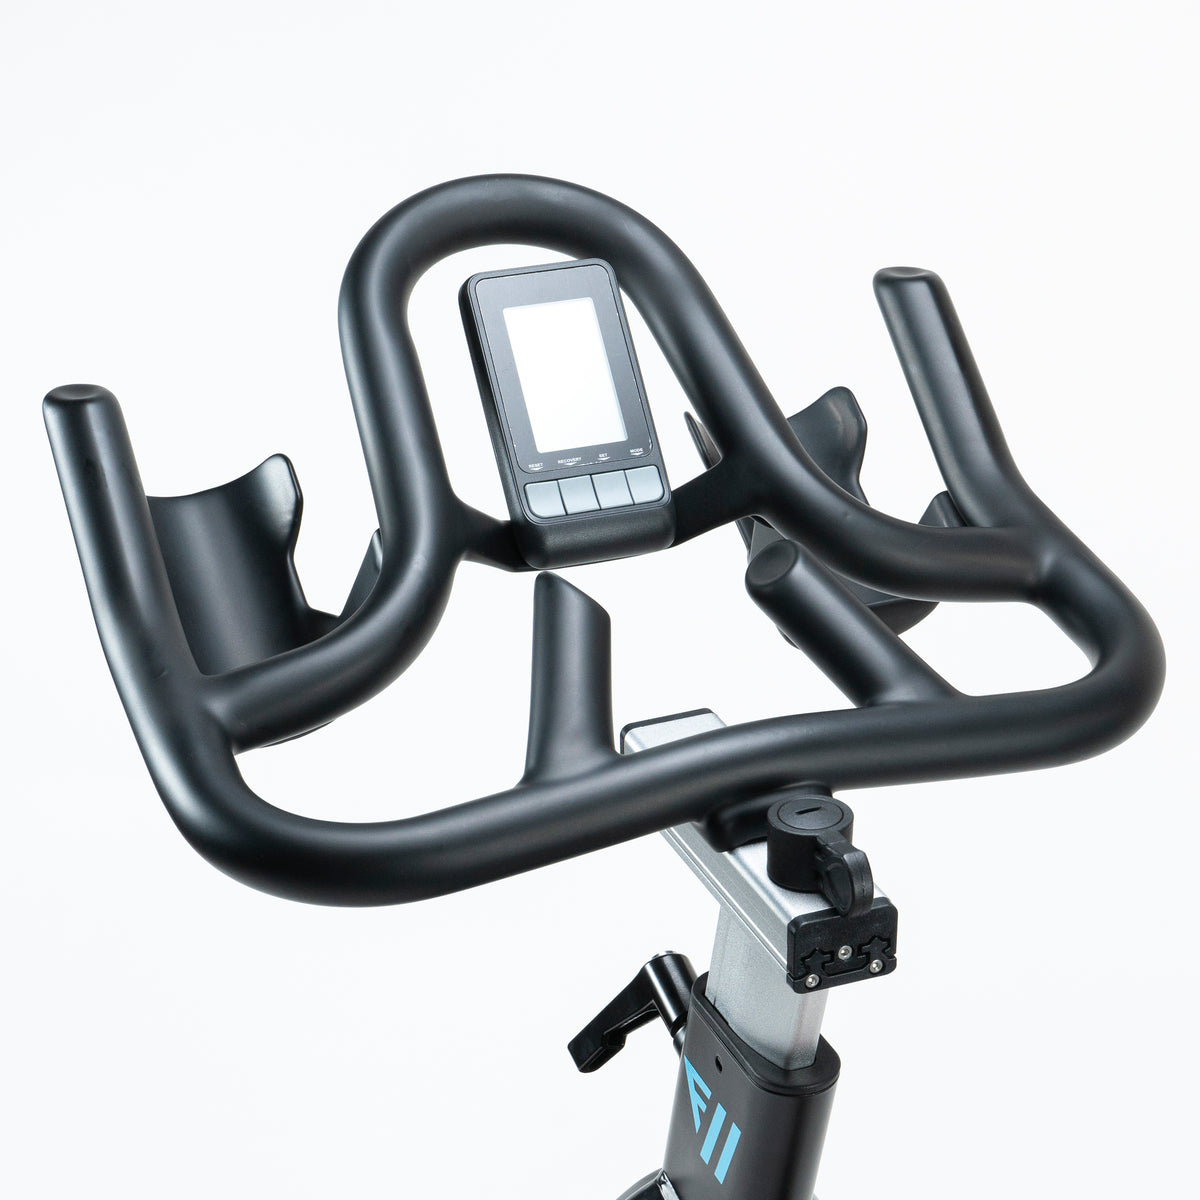 FitWay Equip. 1500IC Indoor Cycle handle view